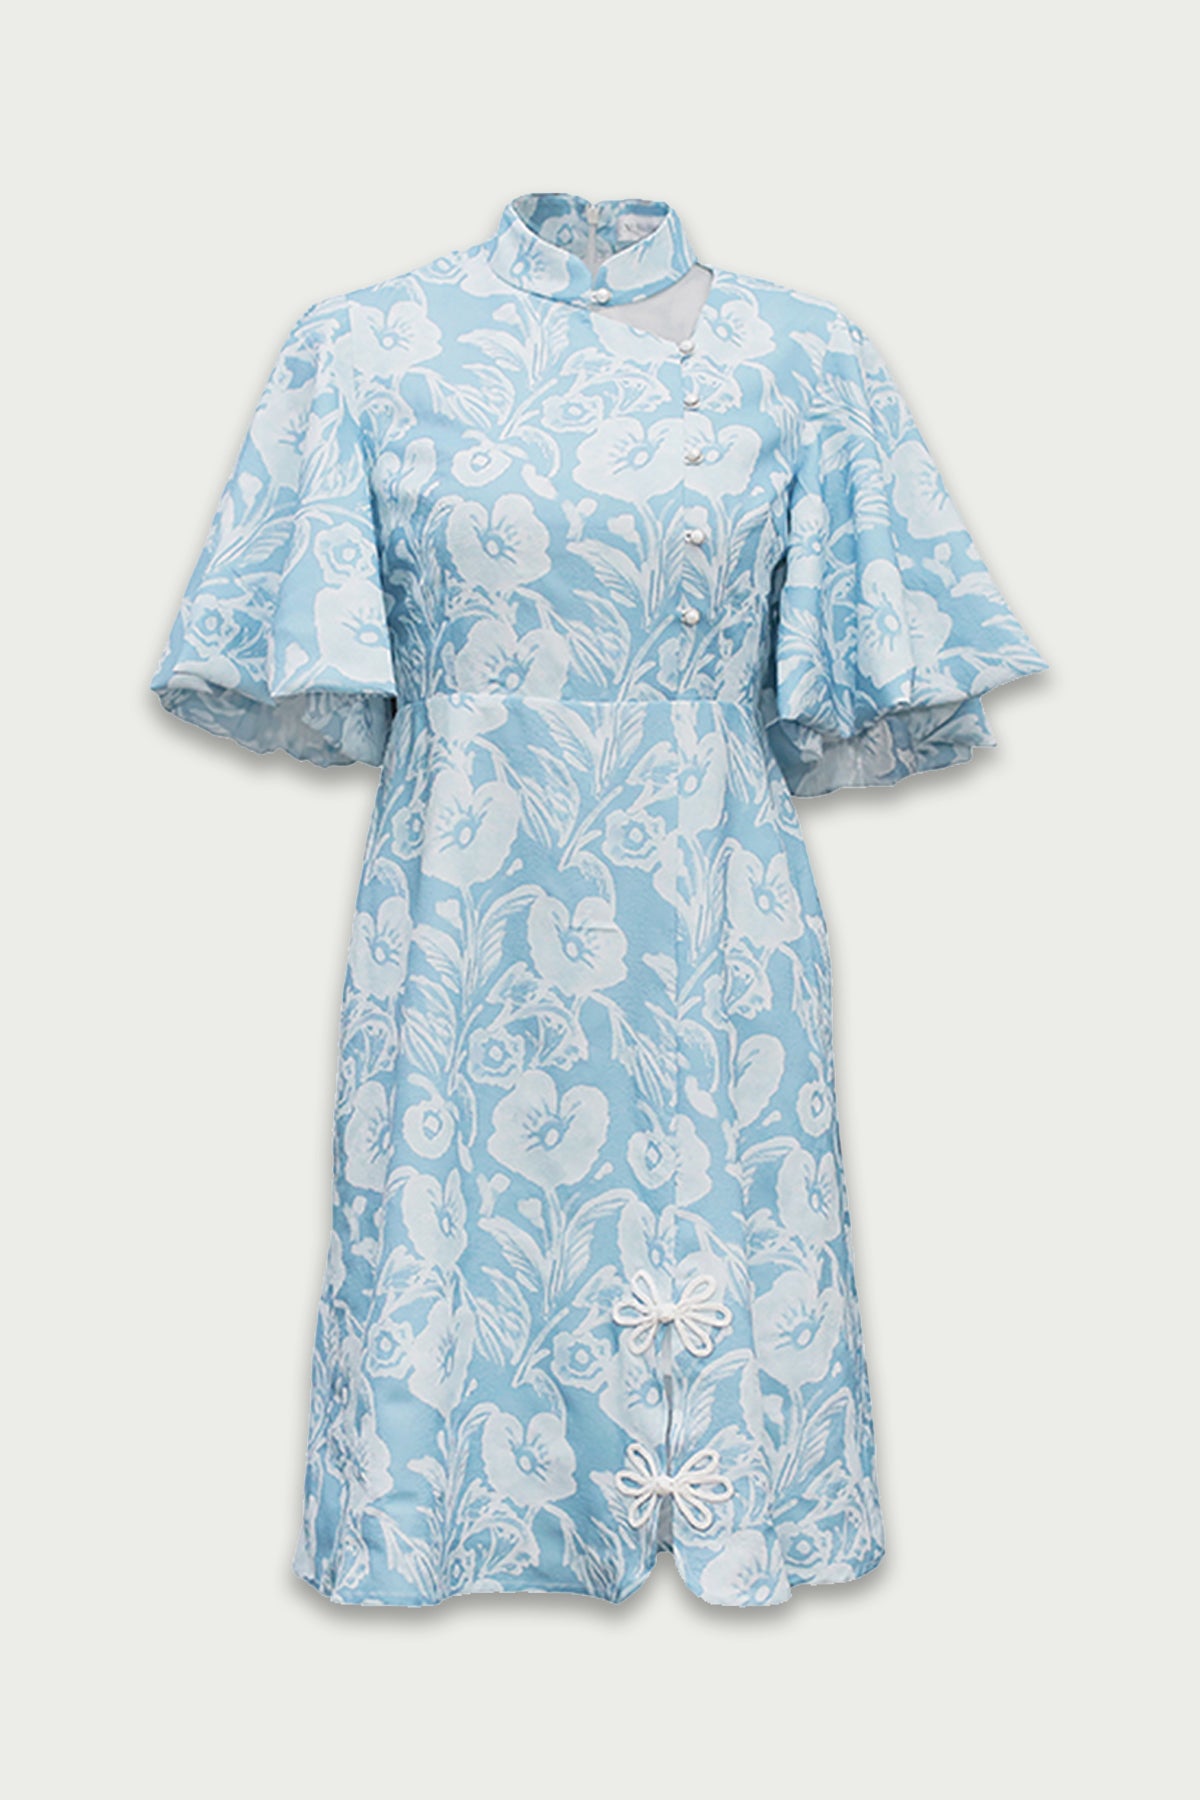 XUNRUO | Light Blue Floral Improved Cheongsam Dress